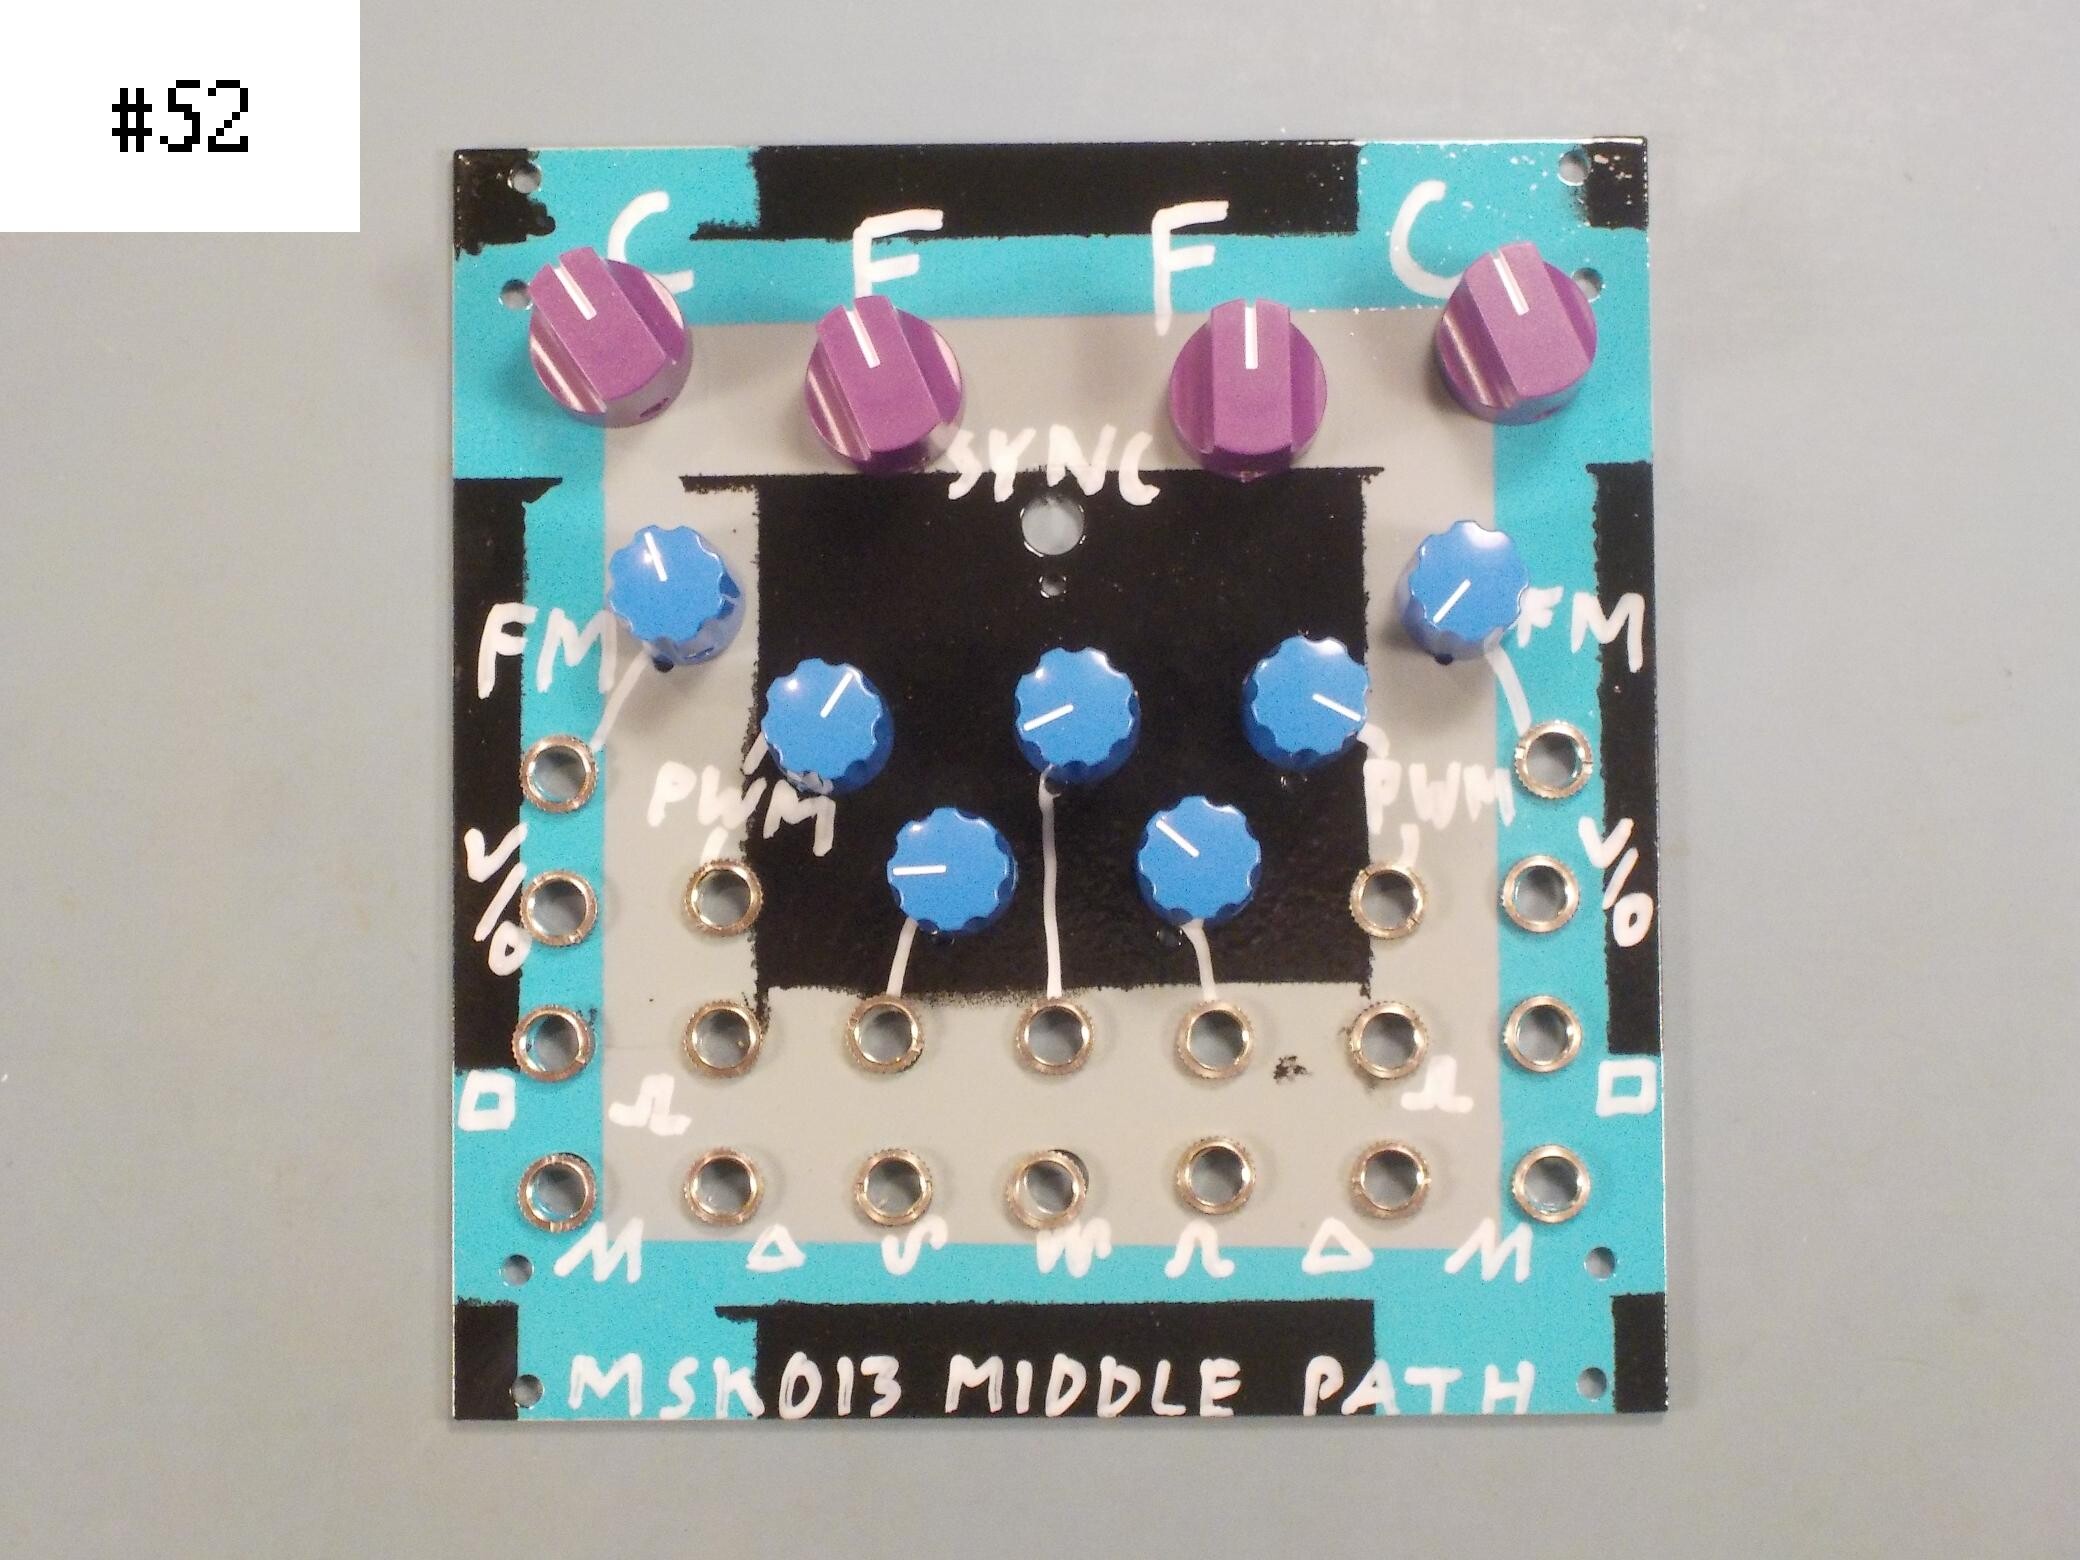 MSK 013 Middle Path VCO, custom panel #52